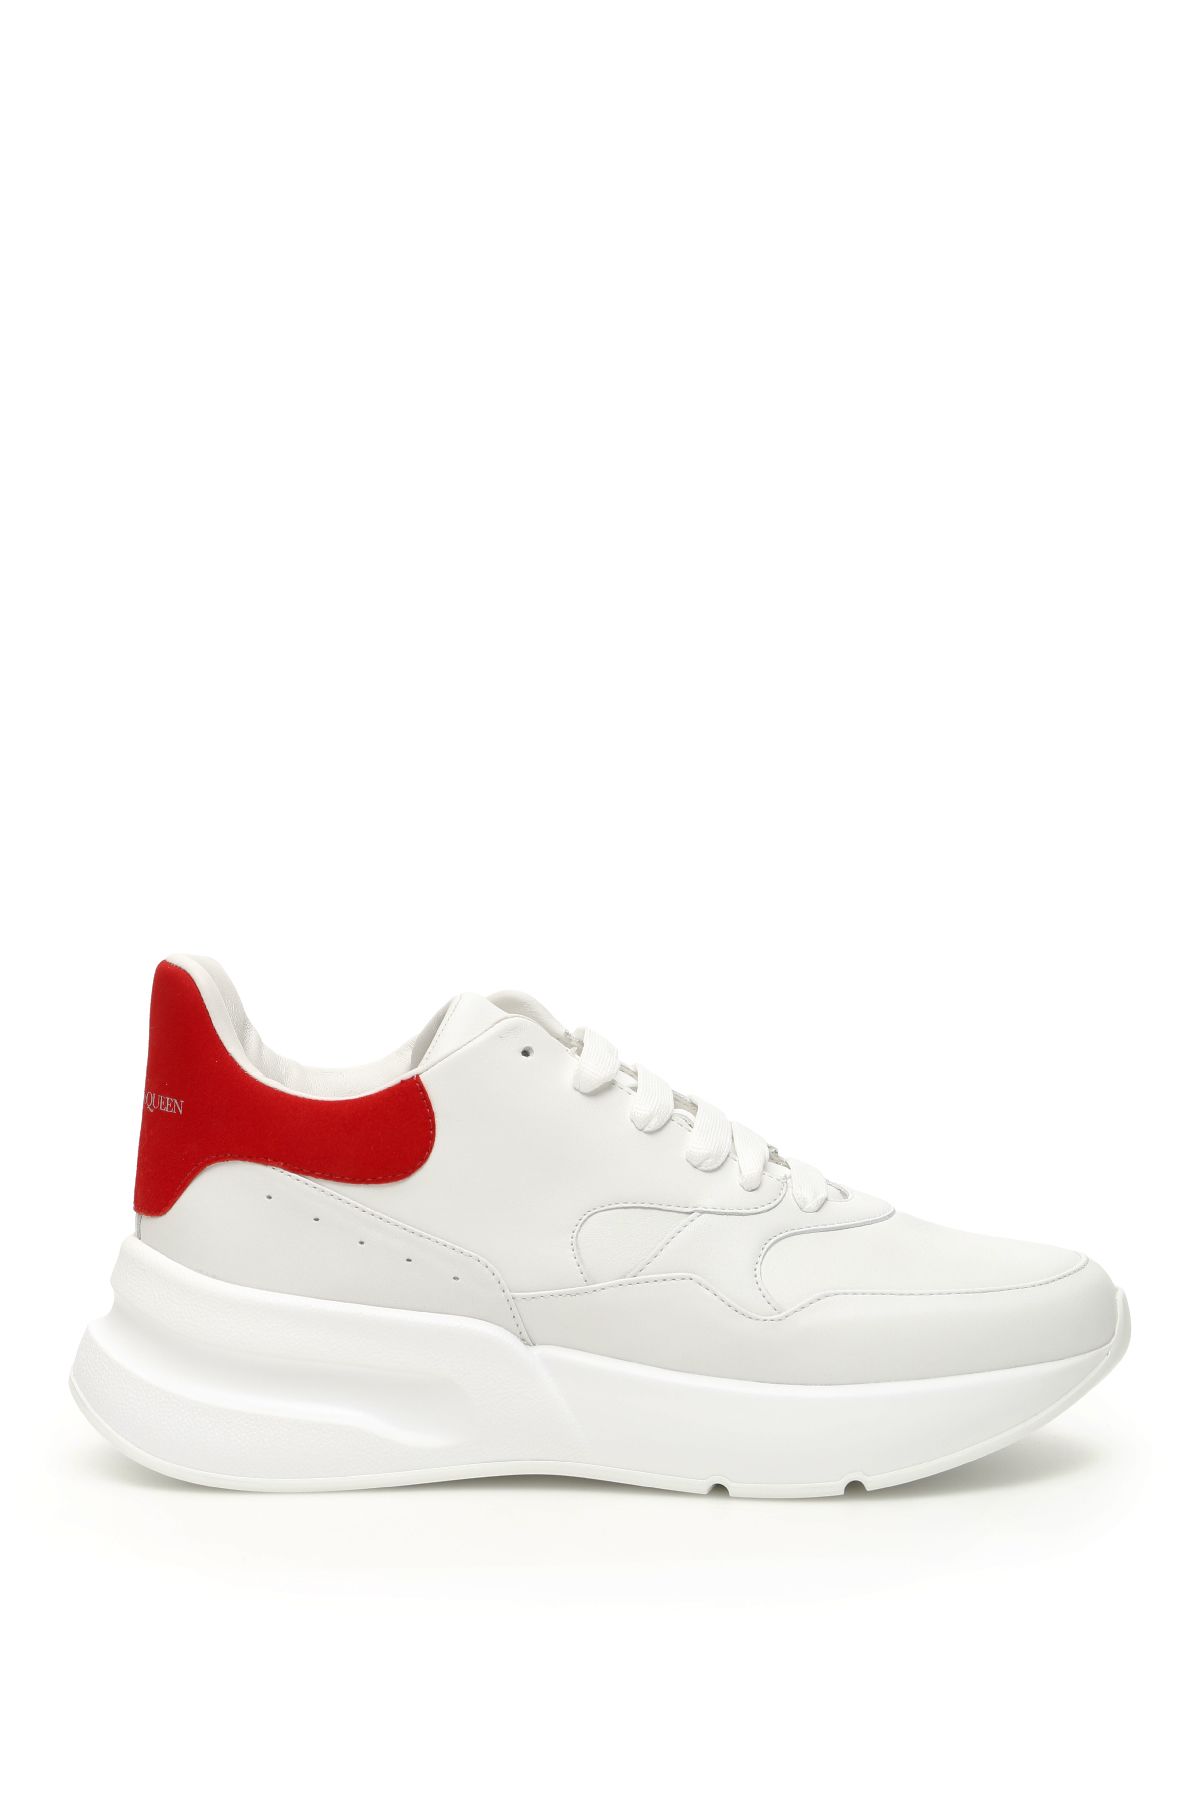 Alexander Mcqueen Oversize Running Sneakers In Opt White Lust Red ...